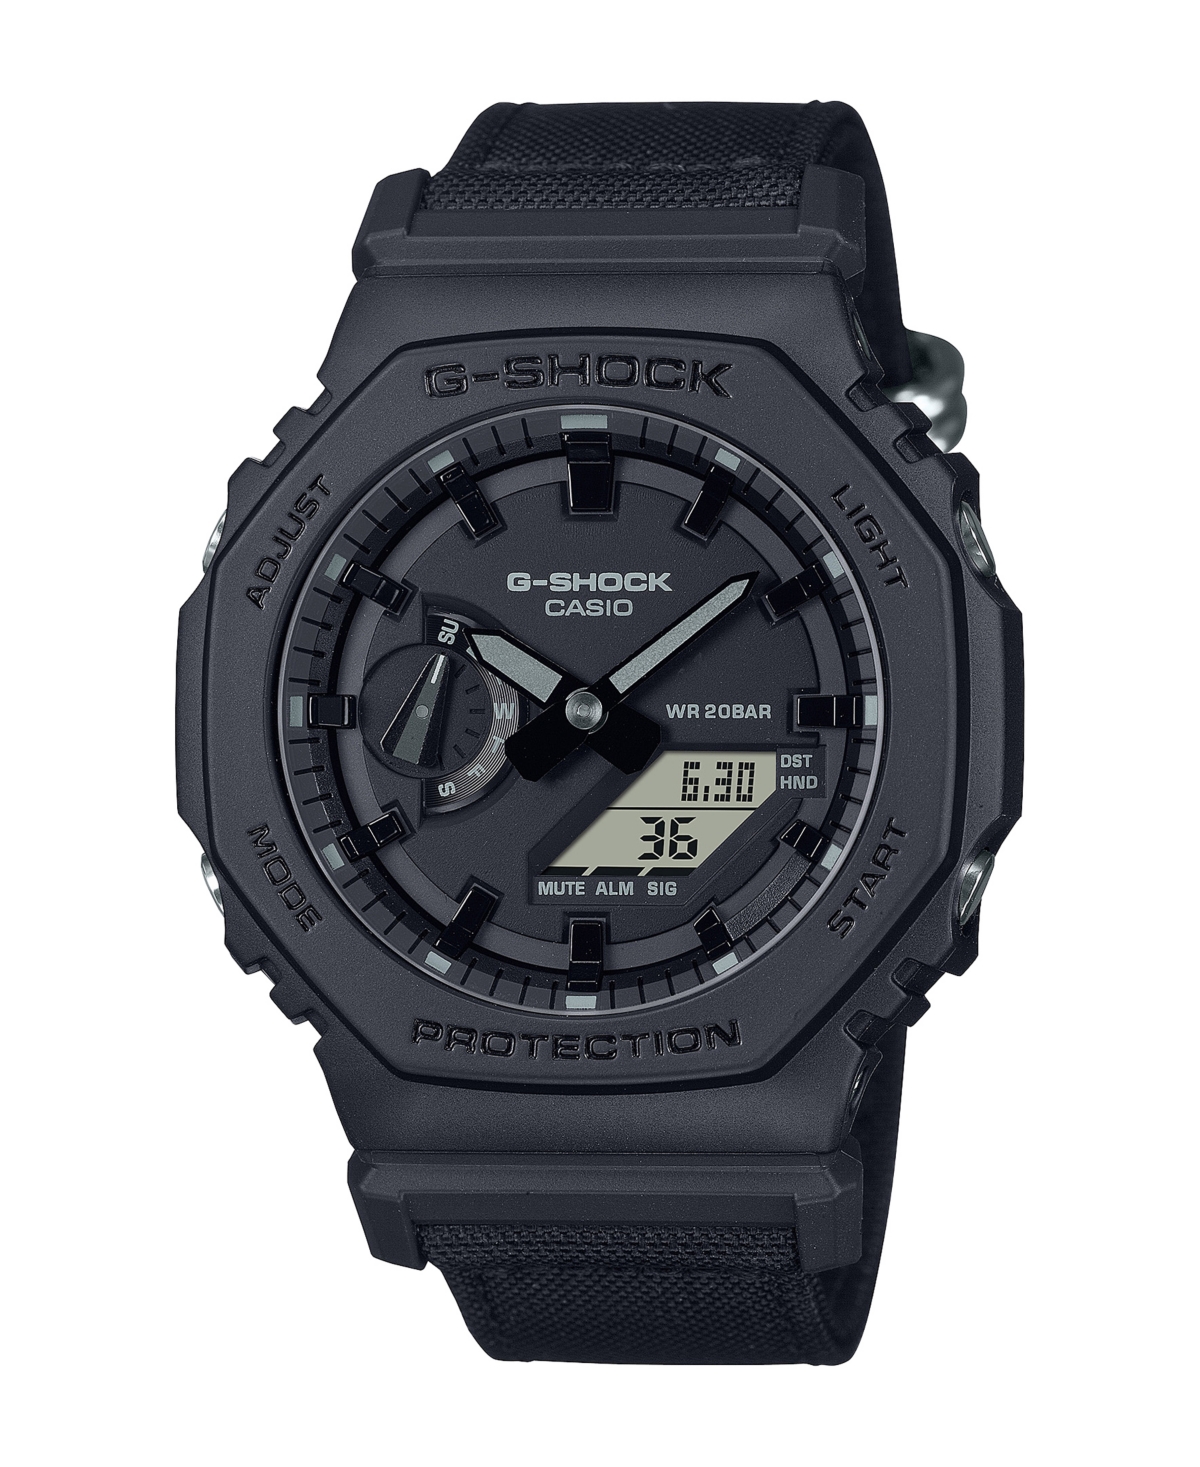 Men's Analog Digital Black Cordura and Resin Watch, 45.4mm, GA2100BCE-1A - Black